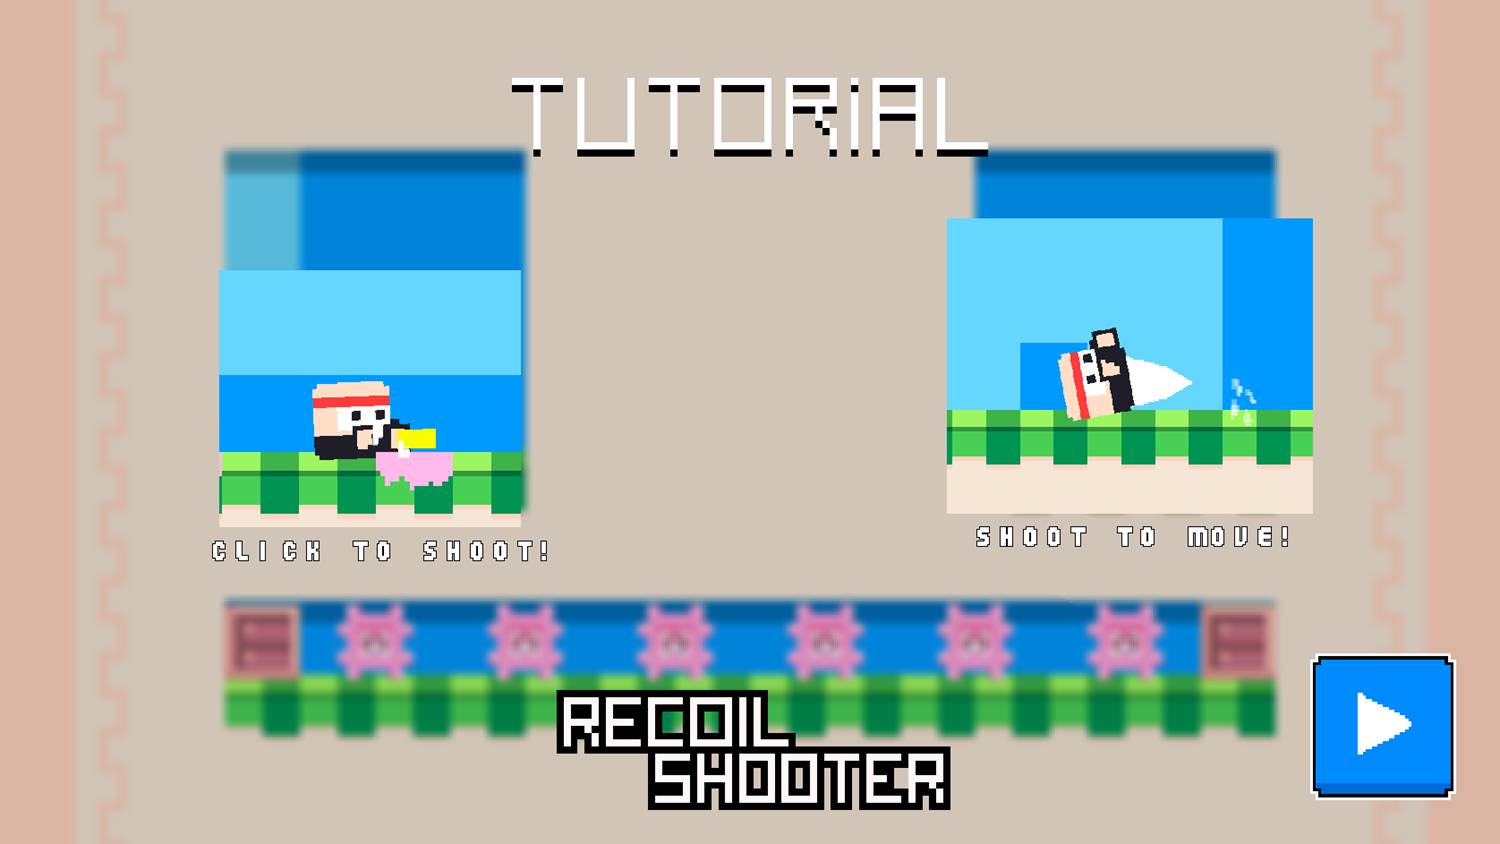 Recoil Shooter Game Tutorial Screenshot.